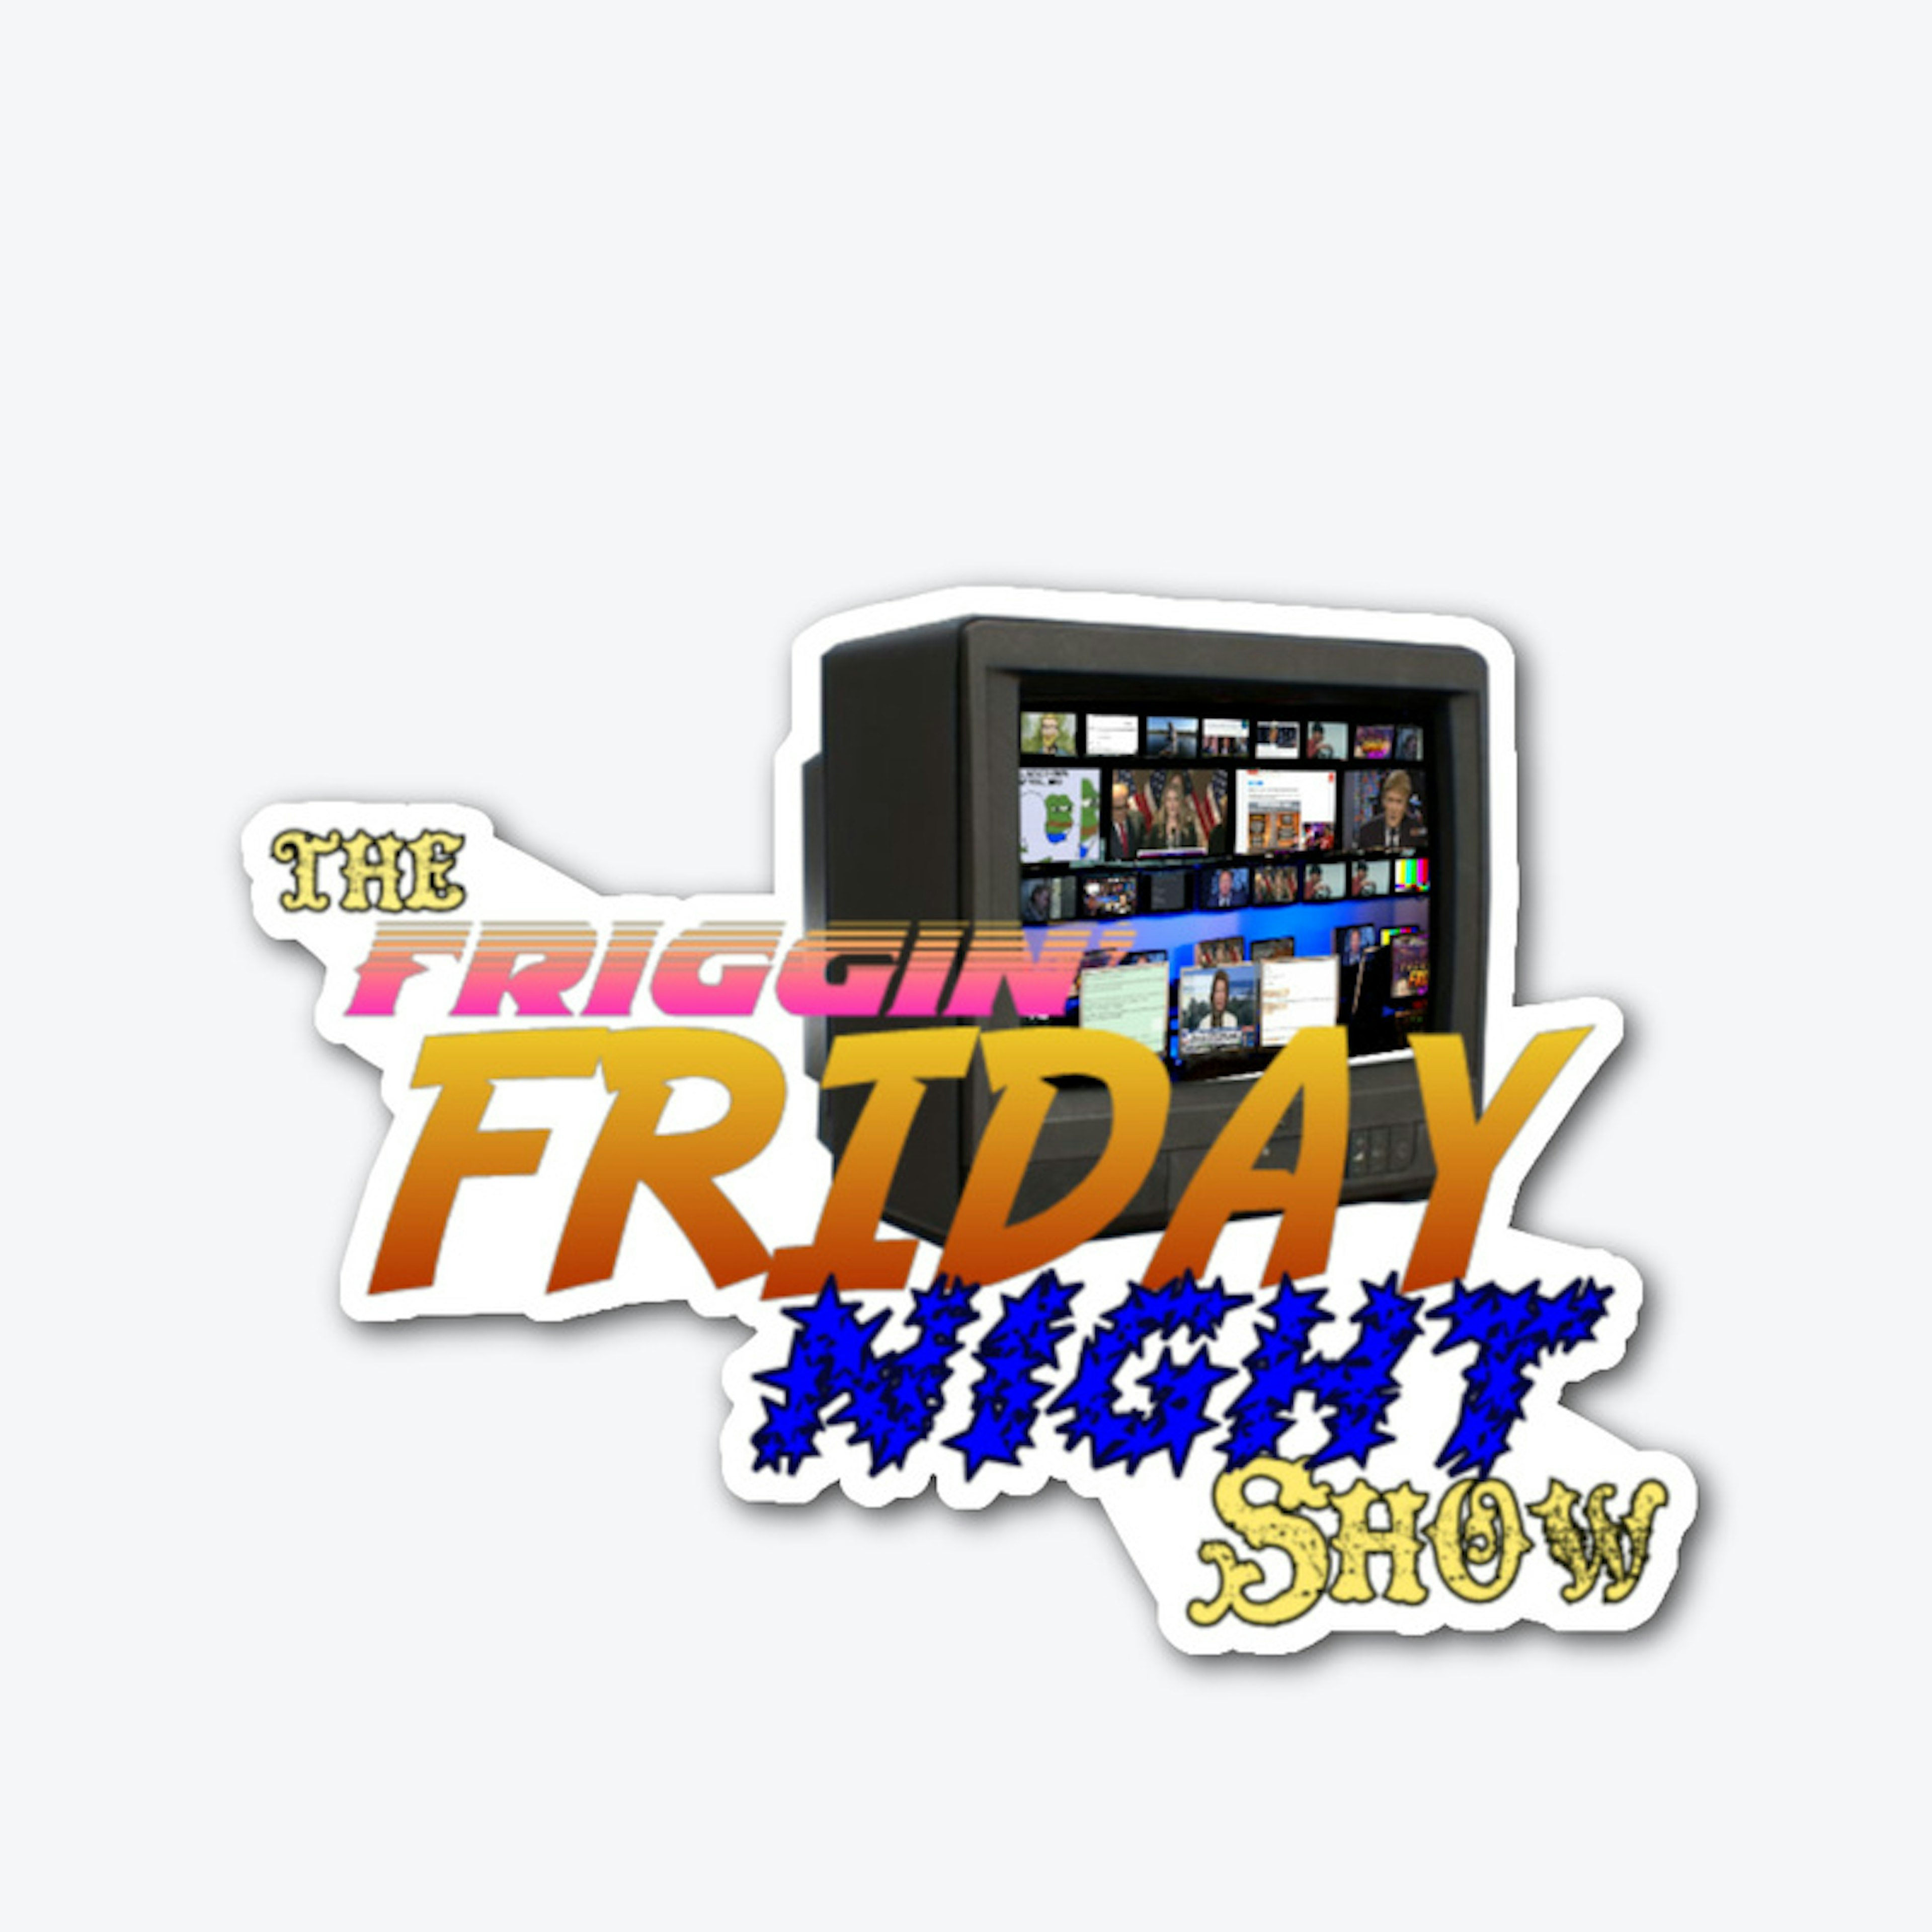 The Friggin Friday Night Show